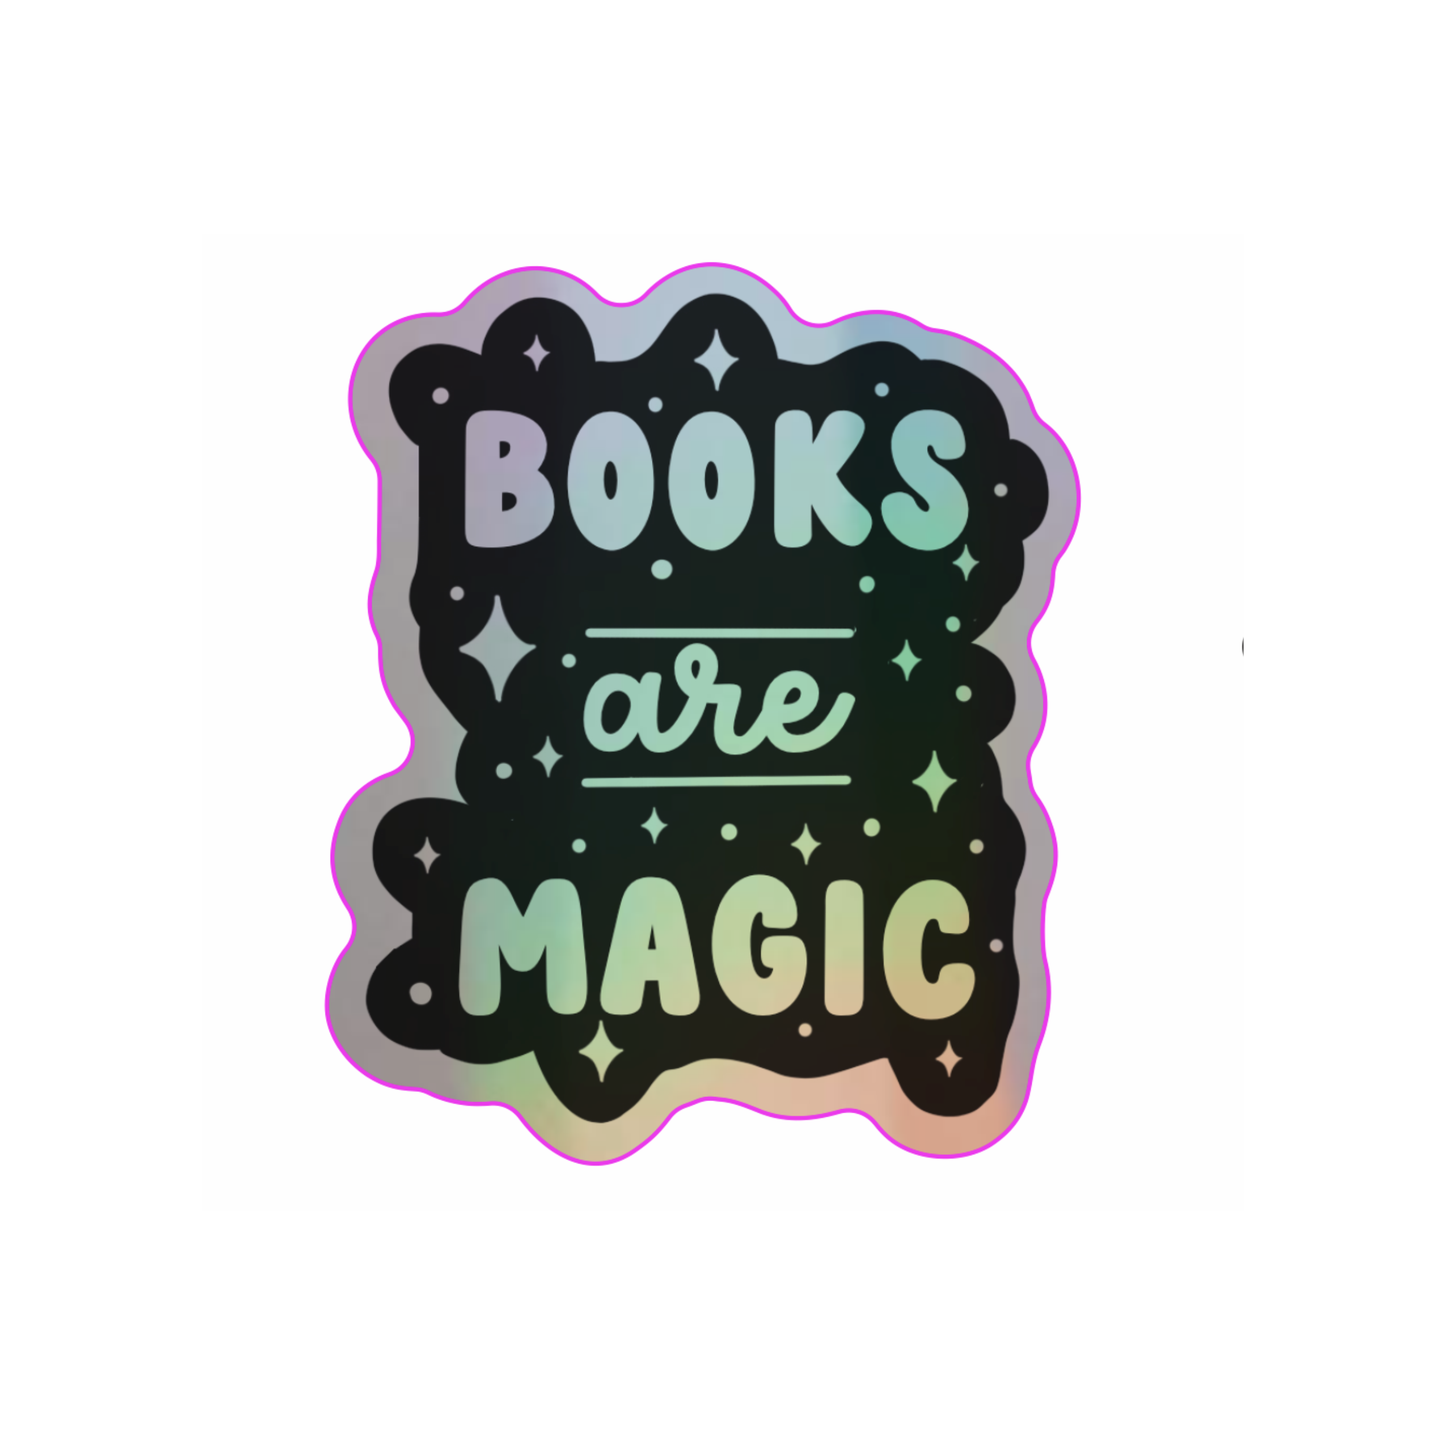 Books are magic reading holographic vinyl sticker